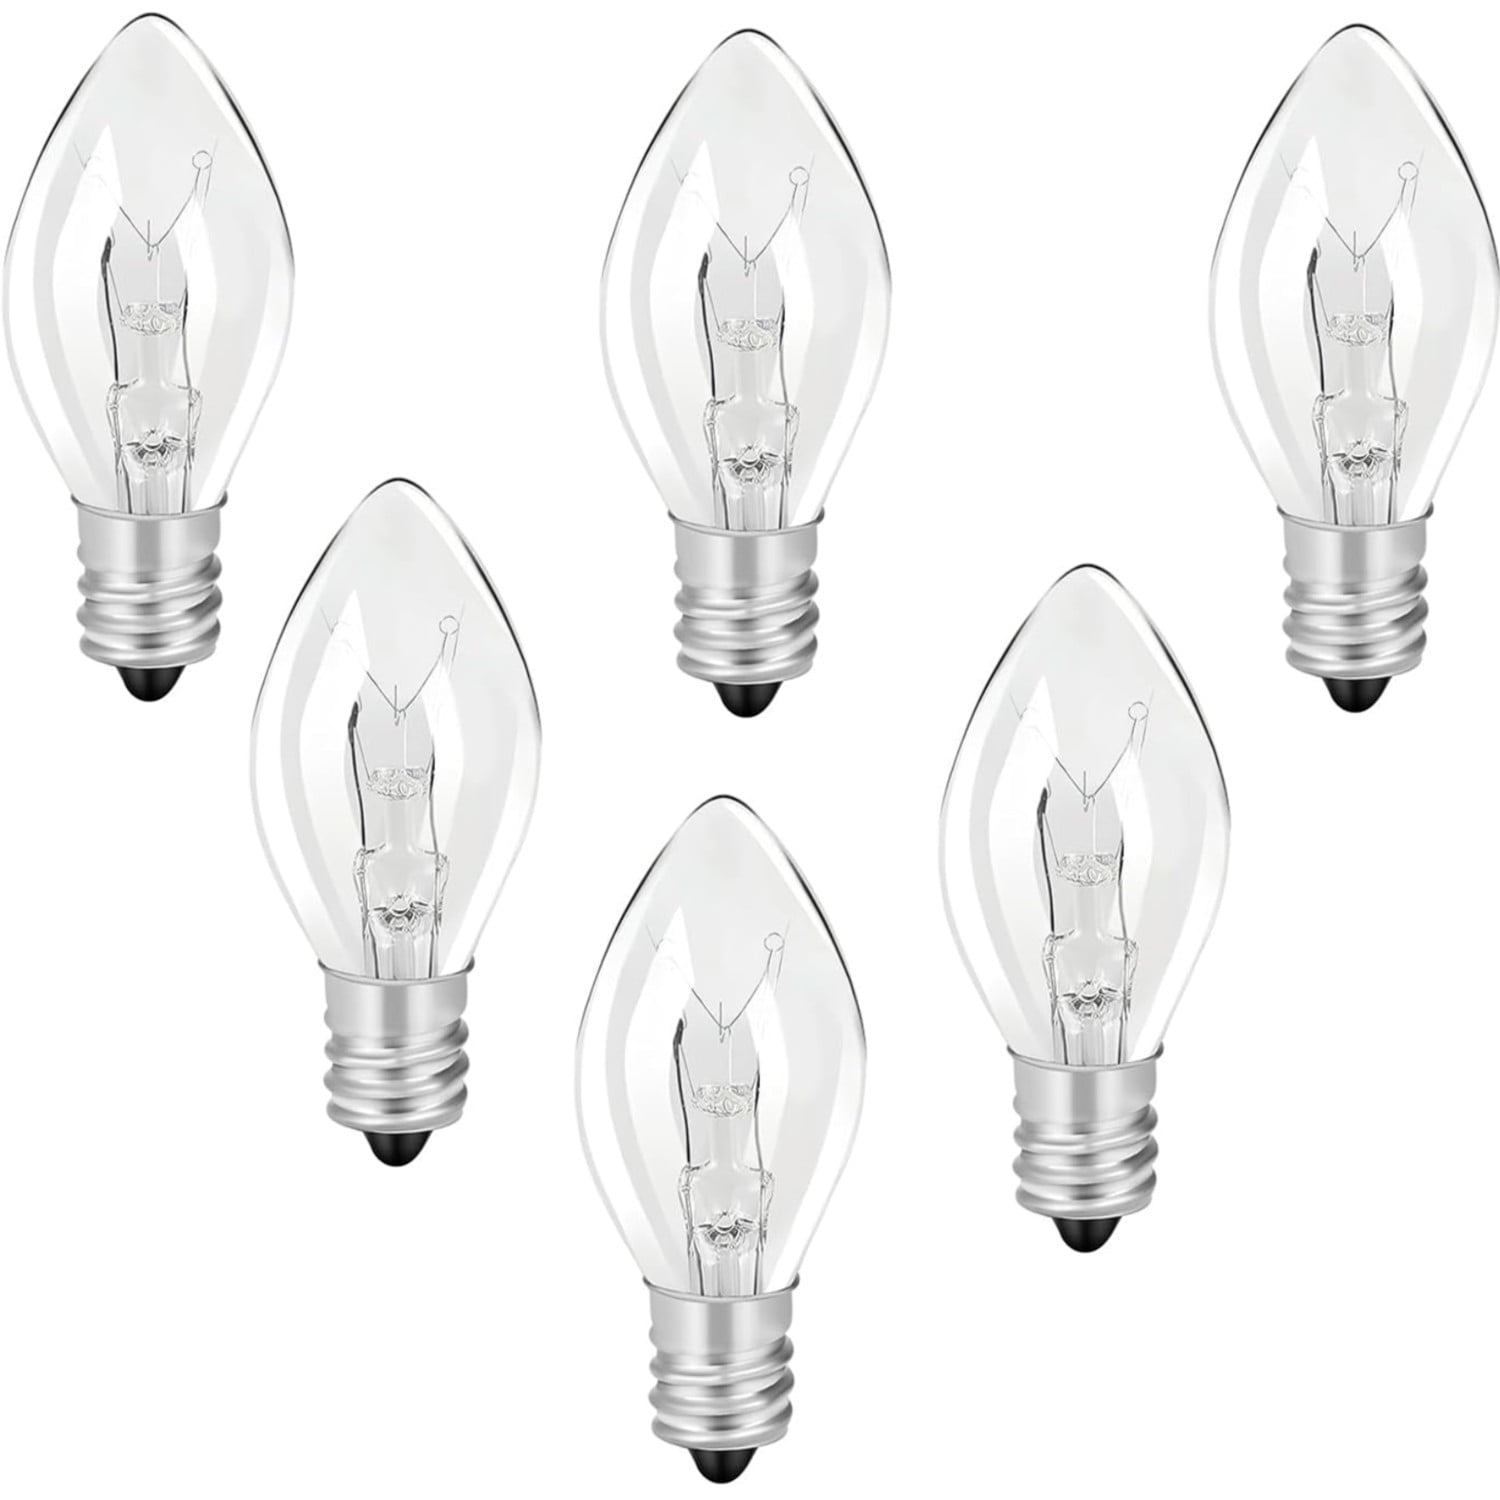 6Packs Flea Trap Replacement Light Bulbs C7 E12 Night Light Bulbs 7W ...